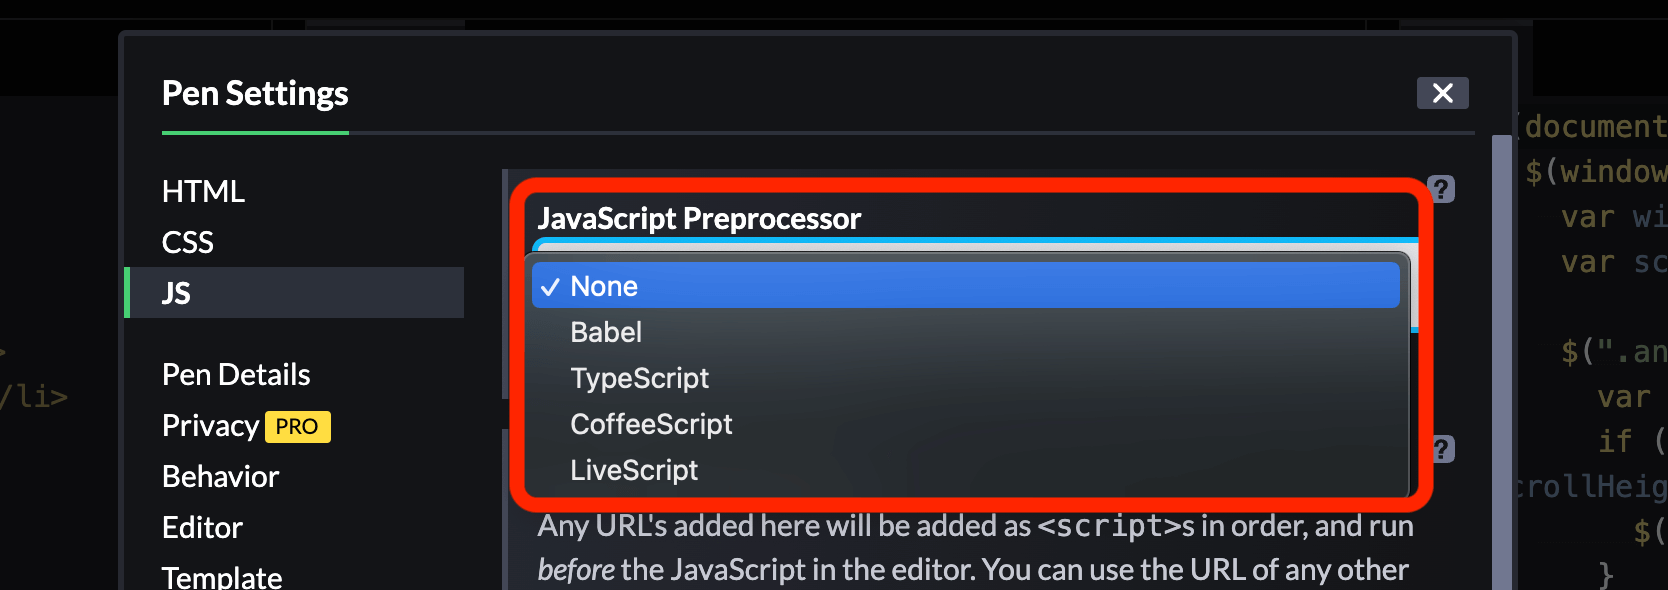 CodePen JavaScript Preprocessorを選択